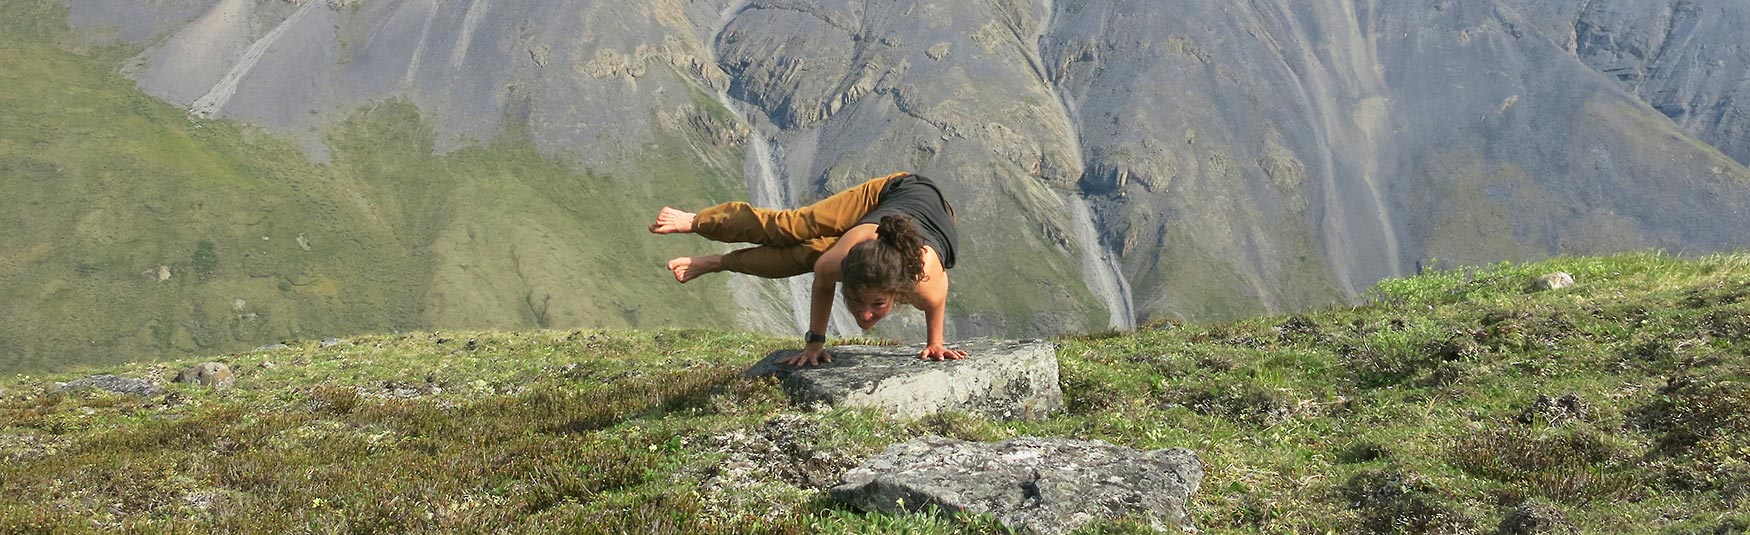 Alaska yoga retreats Wrangell - St. Elias National Park yoga wilderness adventures.